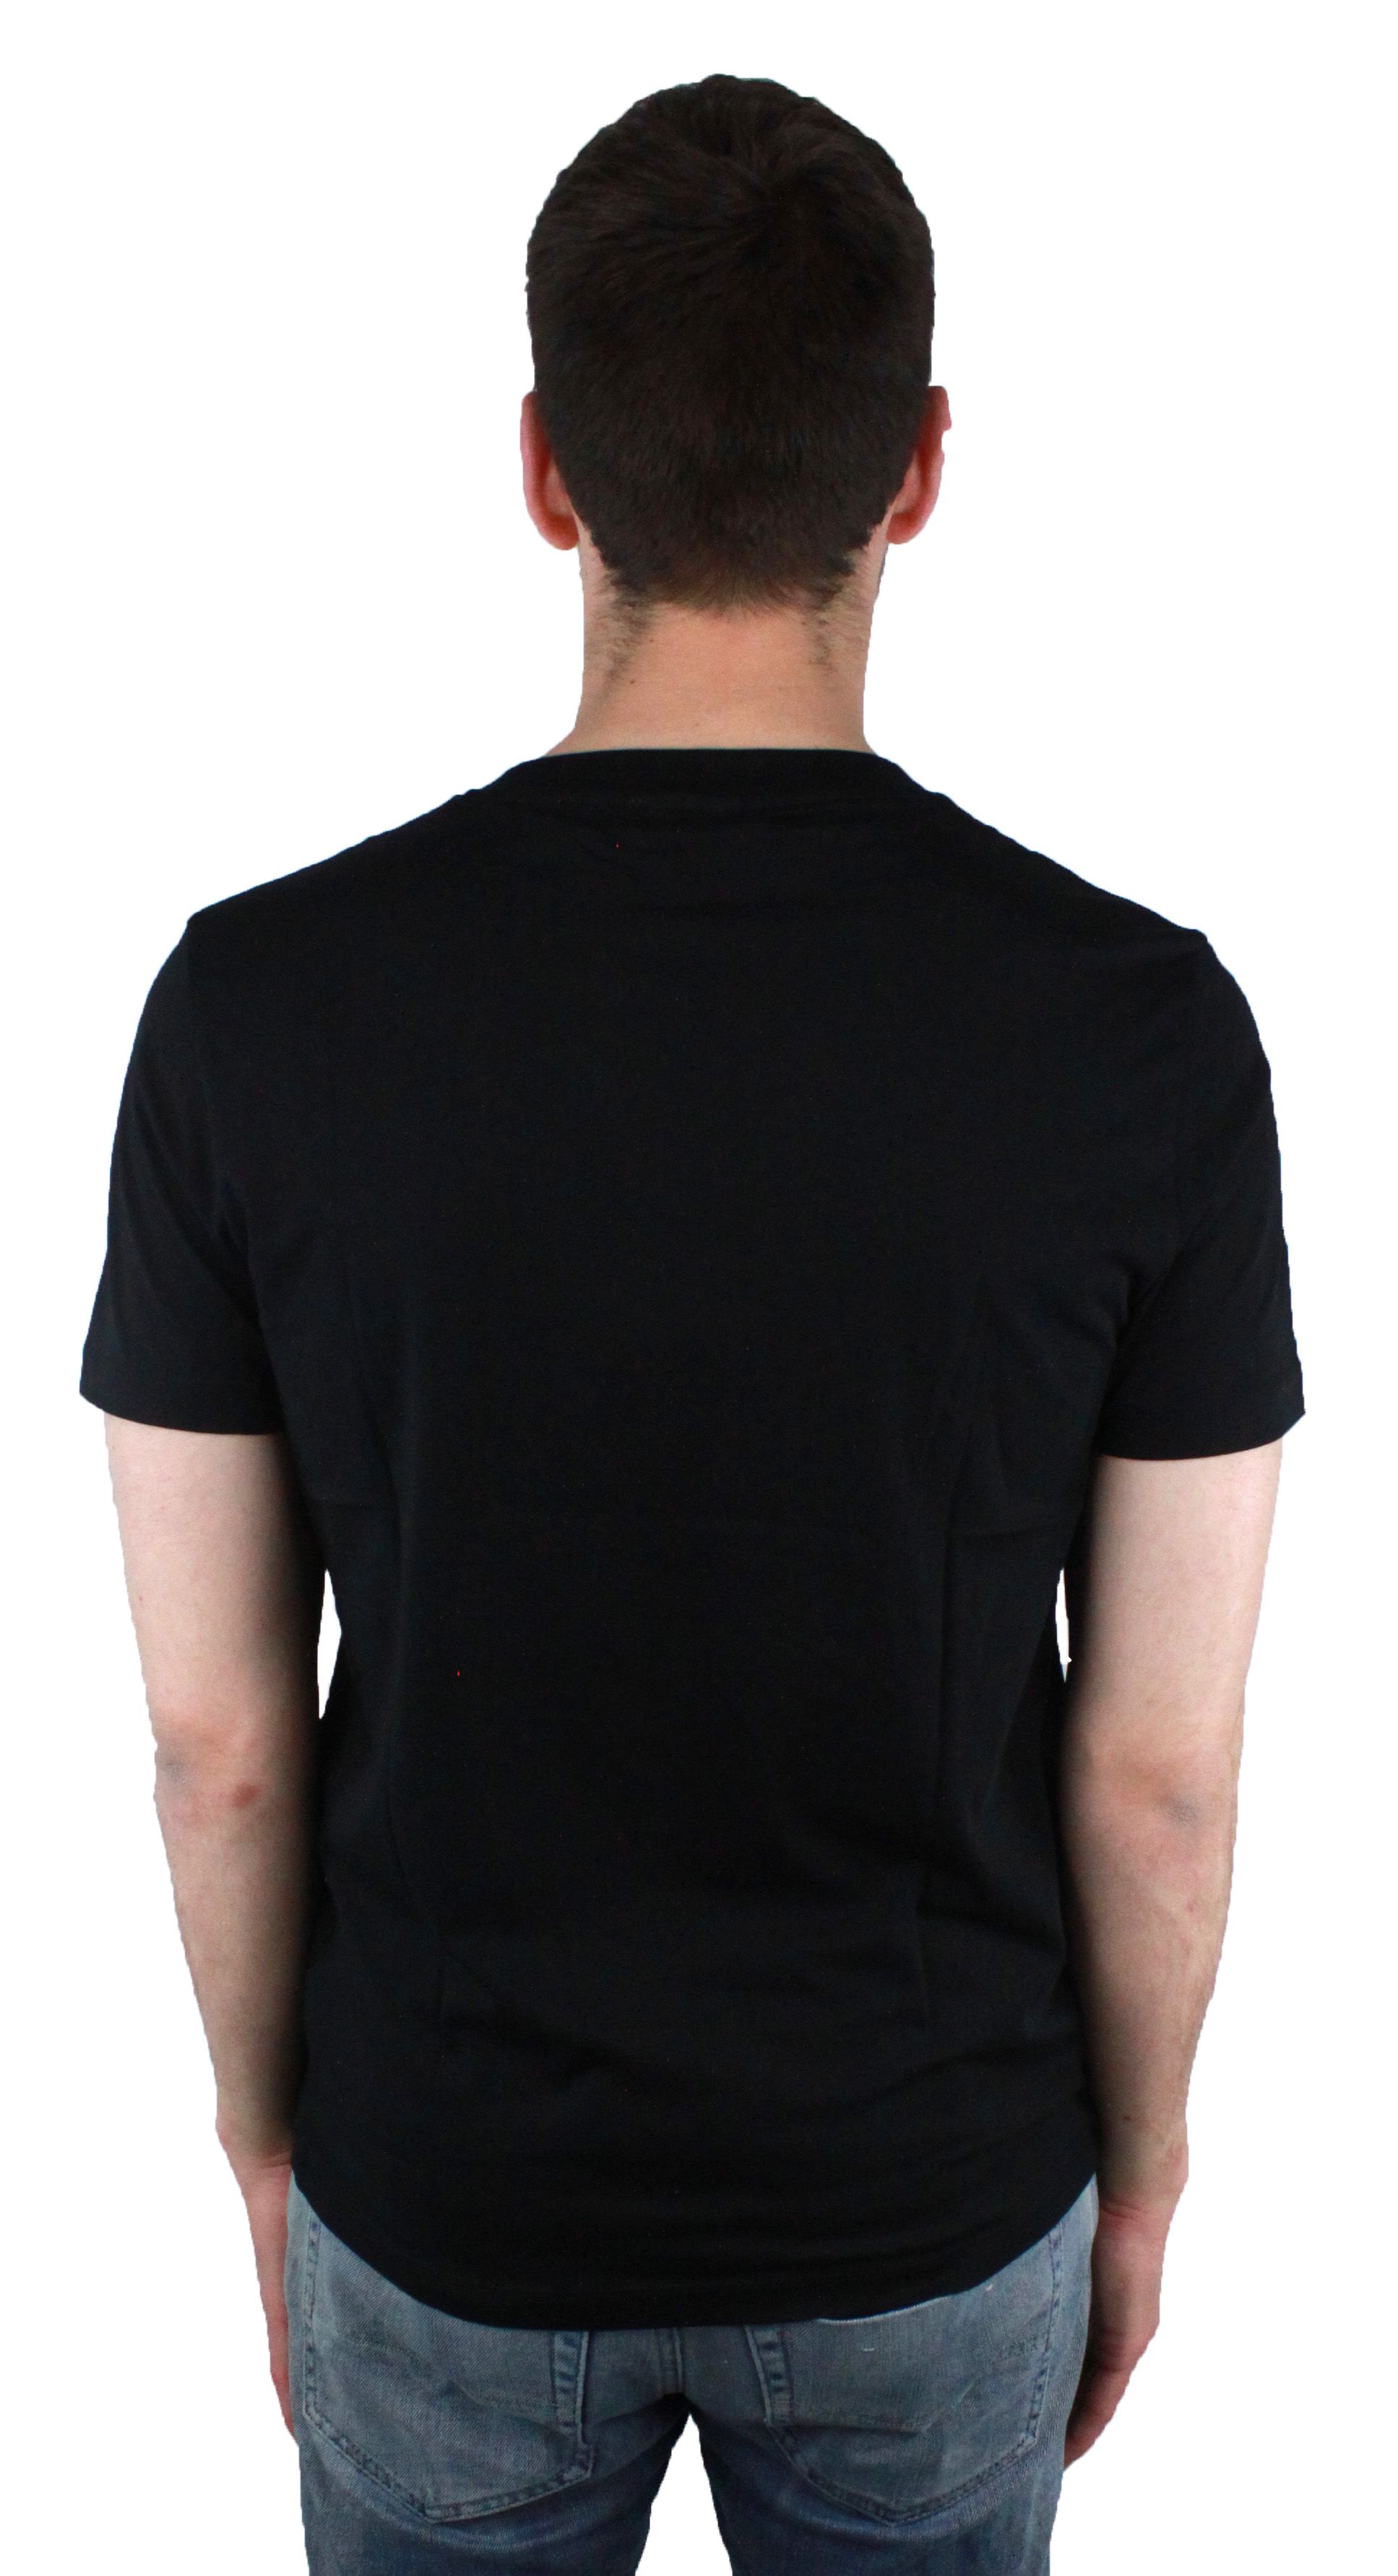 Emporio Armani 3Z1T77 Black T-Shirt. Short Sleeved Black T-Shirt. Logo On Front Bottom Left. 100% Cotton. Style: 3Z1T77 1JPZZ. Crew Neck